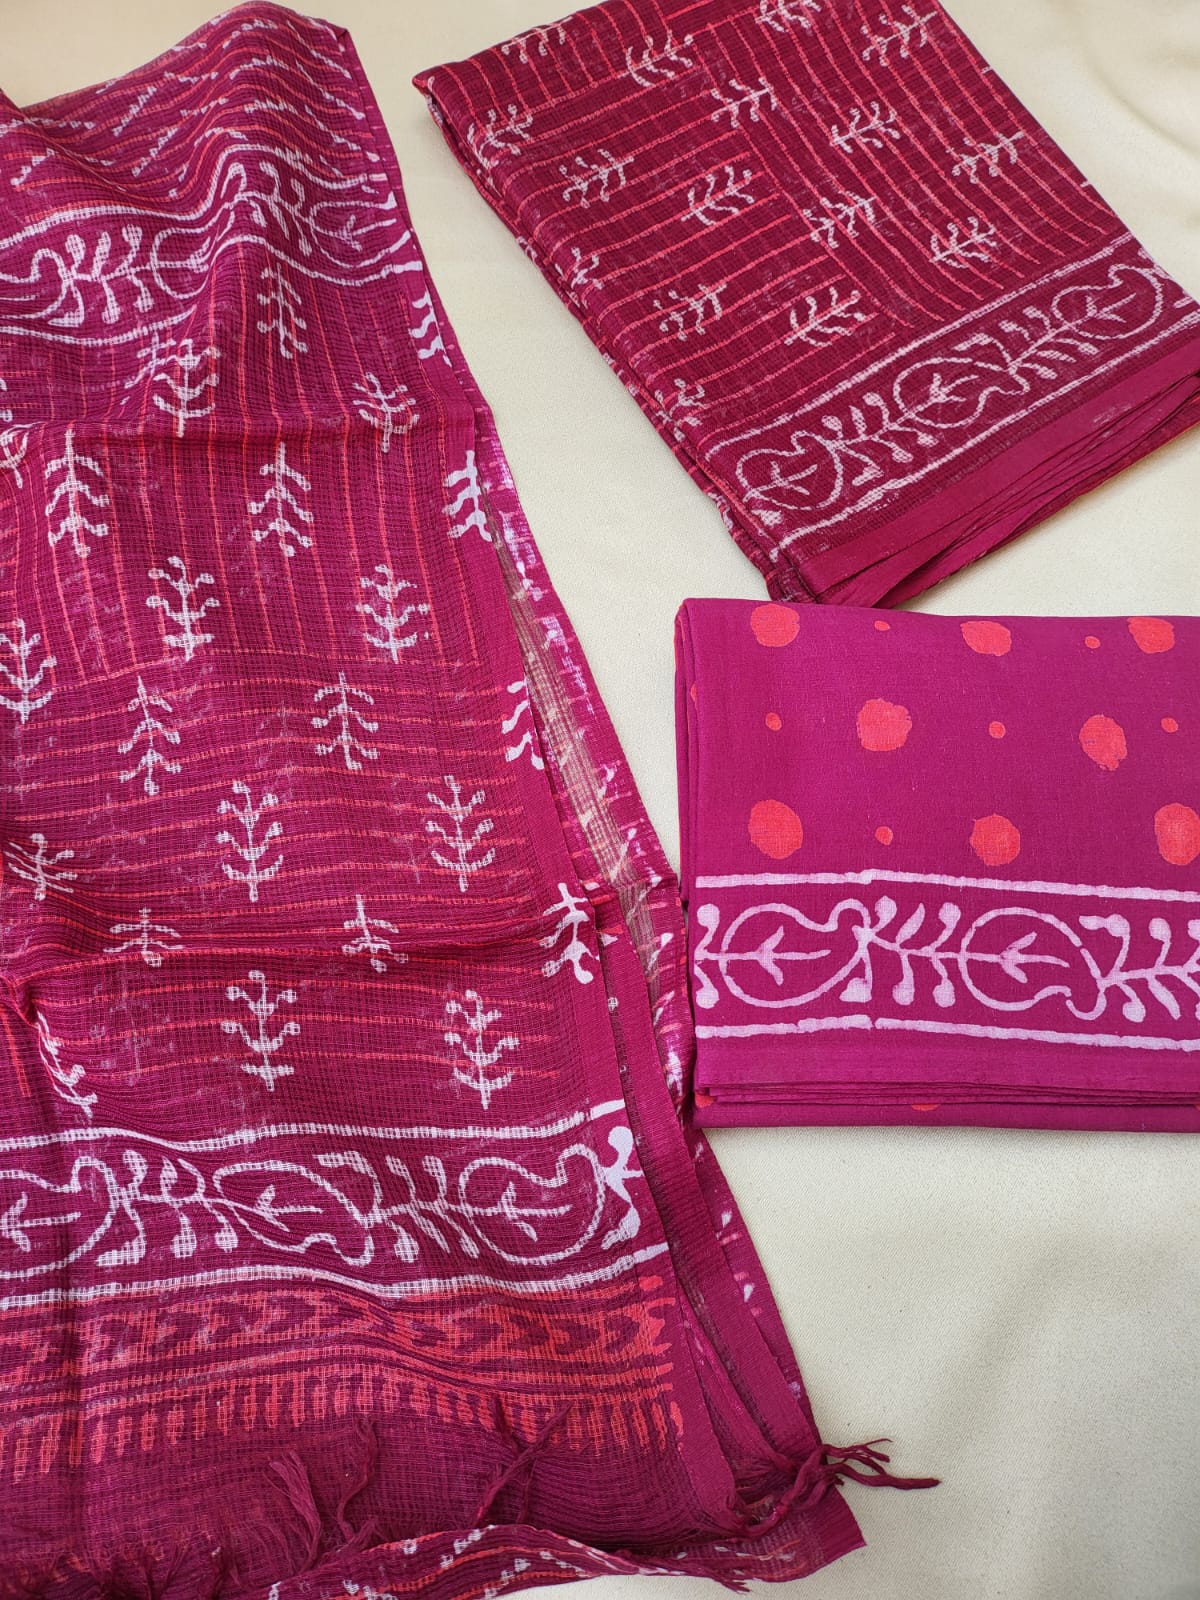 Jaipuri Printed Unstitched Cotton Suit Material | LRSSLNI-1022-12 ...